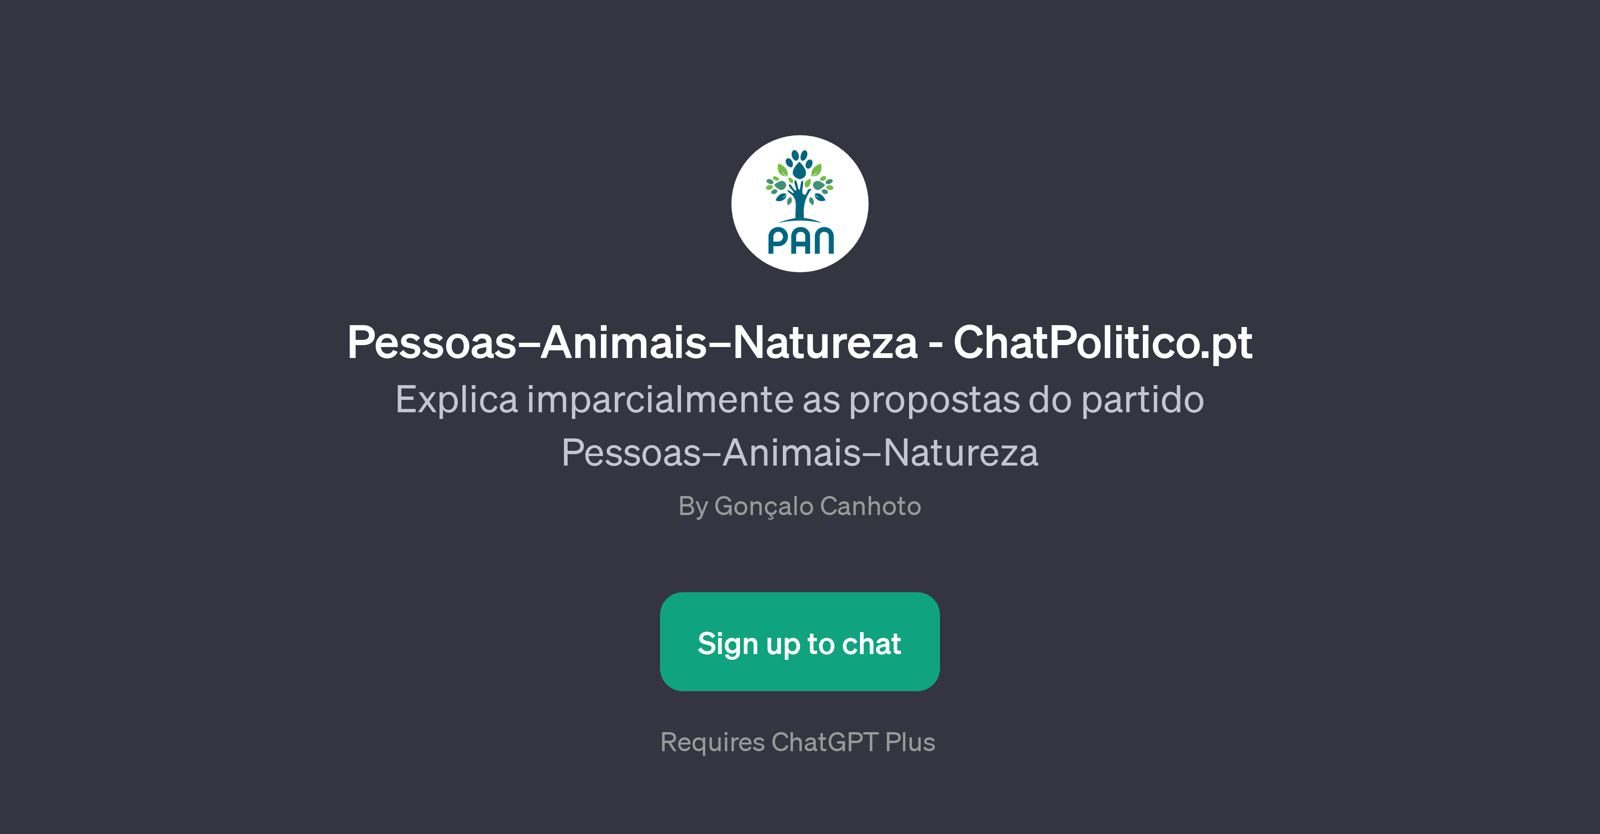 PessoasAnimaisNatureza - ChatPolitico.pt website